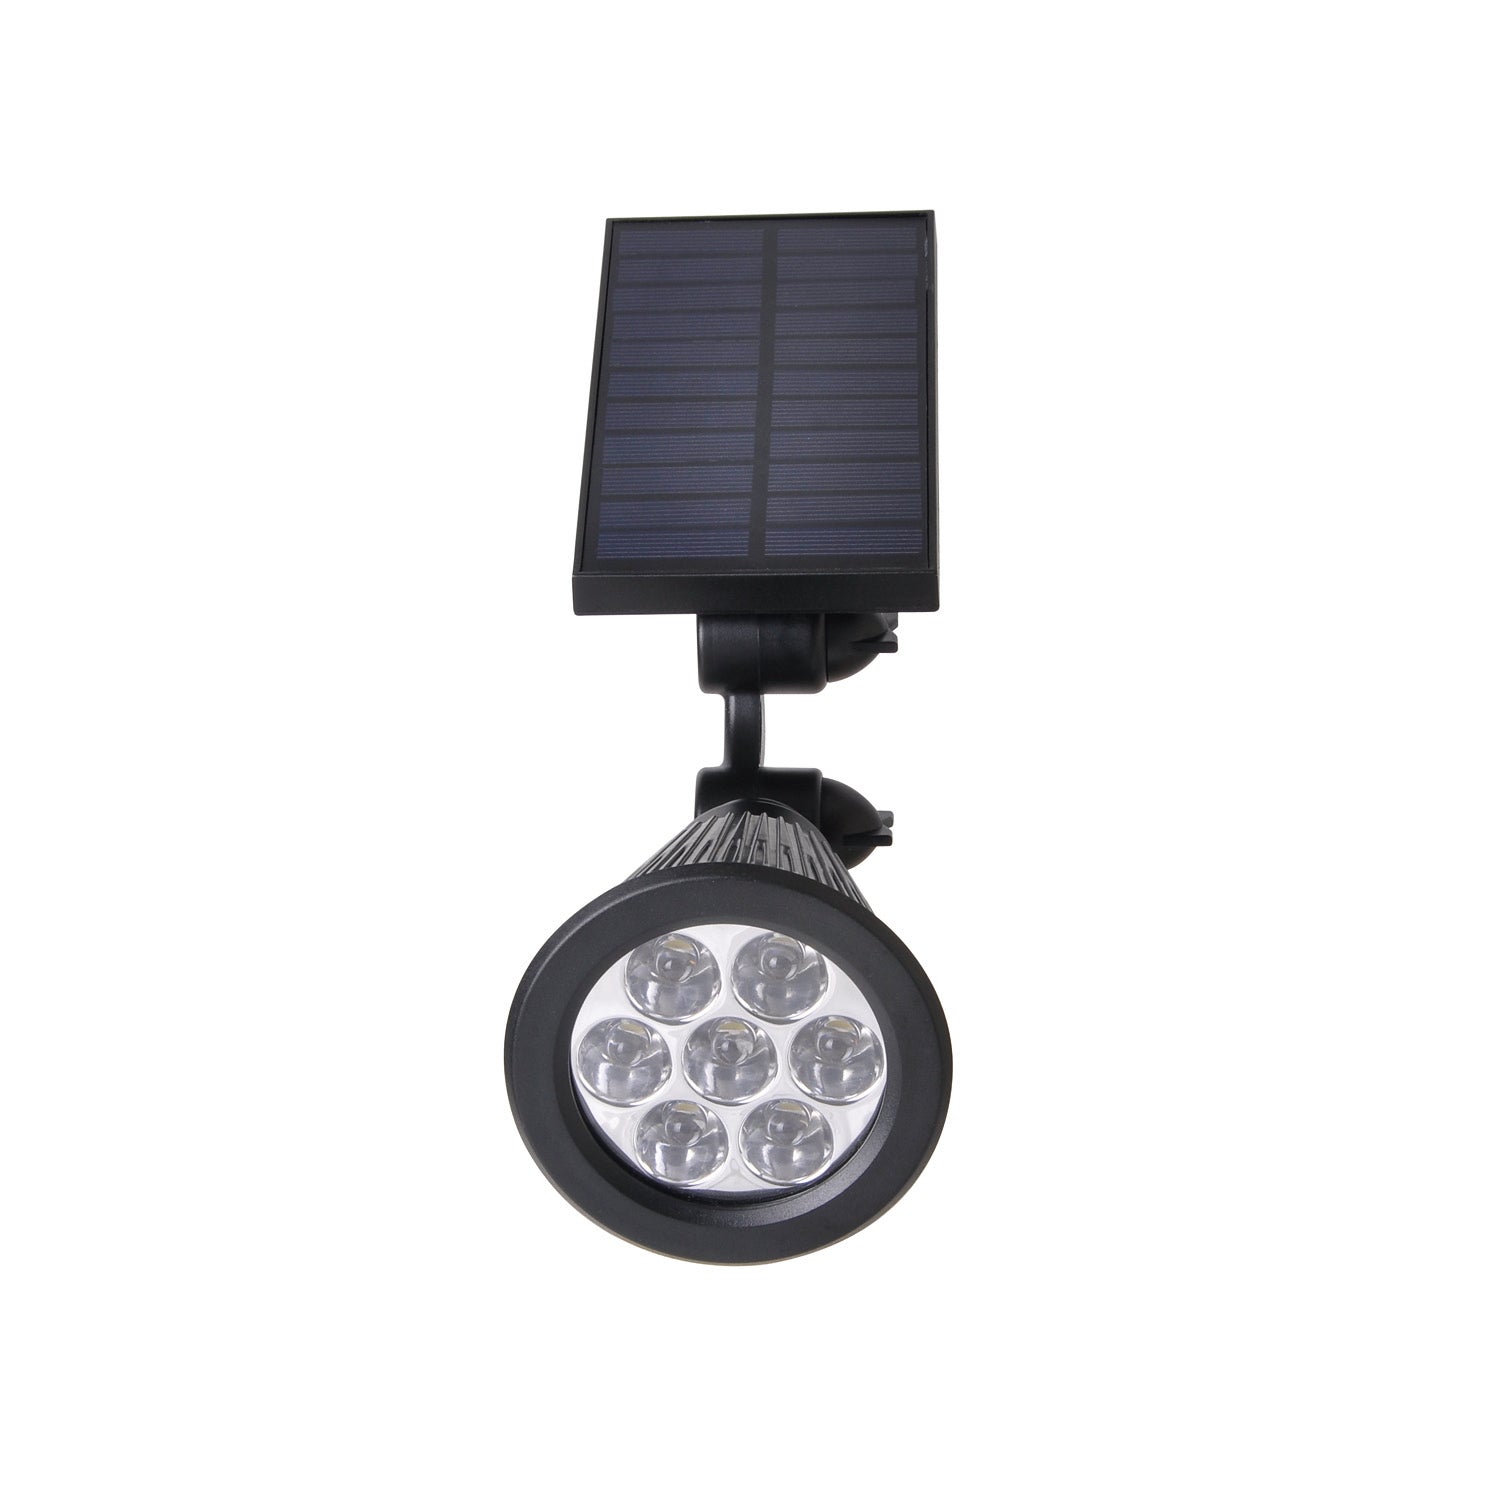 Pack of 2 LED Solar Spotlights, Super Bright 400LM Outdoor Security Garden Landscape Lamps, 180°Angle Adjustable